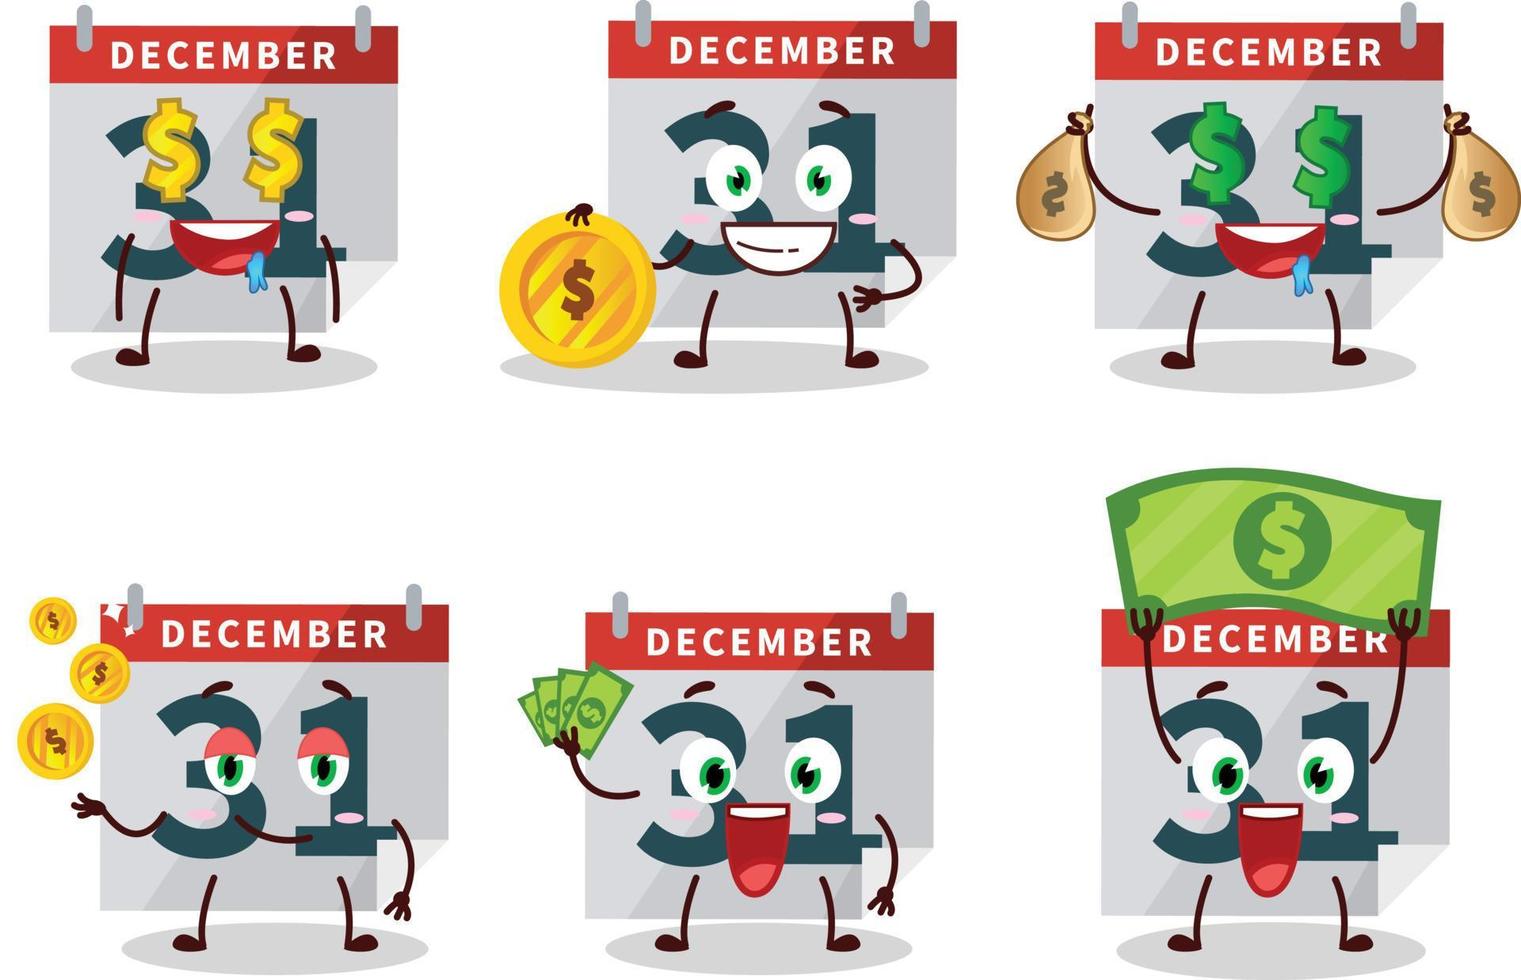 December 31th calendar cartoon character with cute emoticon bring money vector